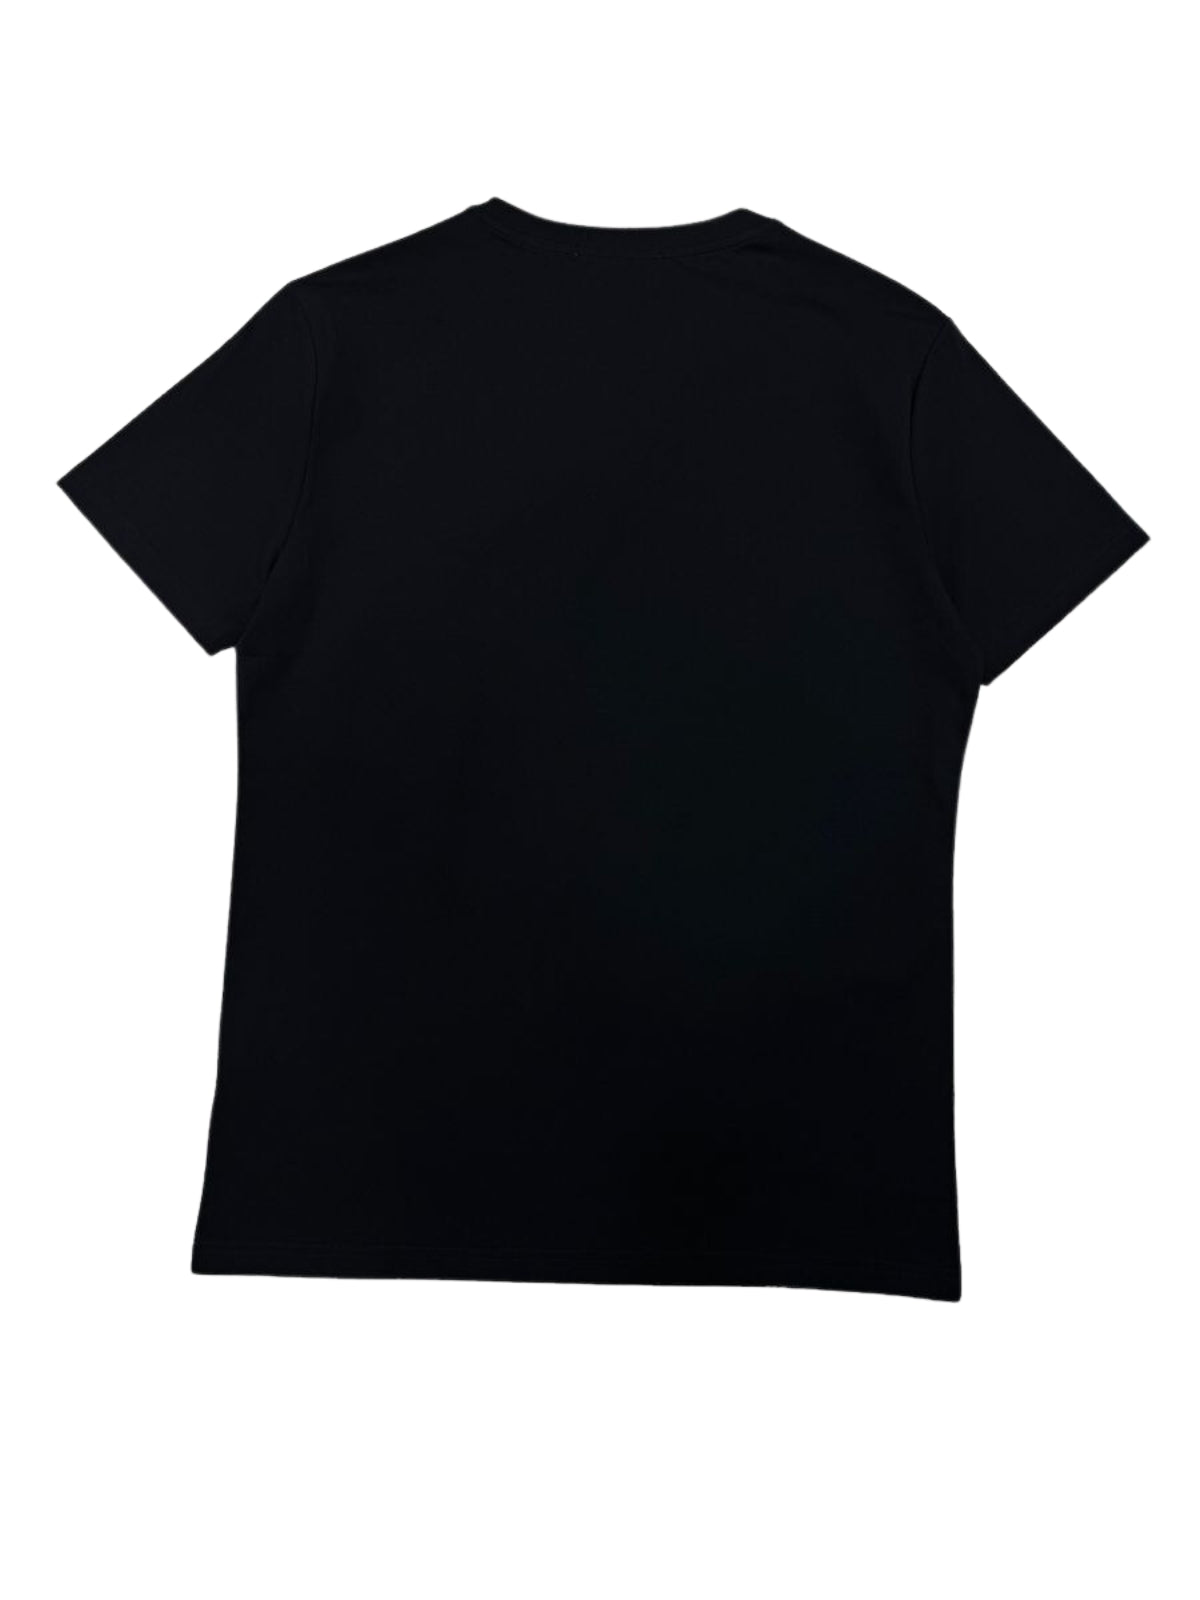 Enrico T-Shirt Center Logos Black